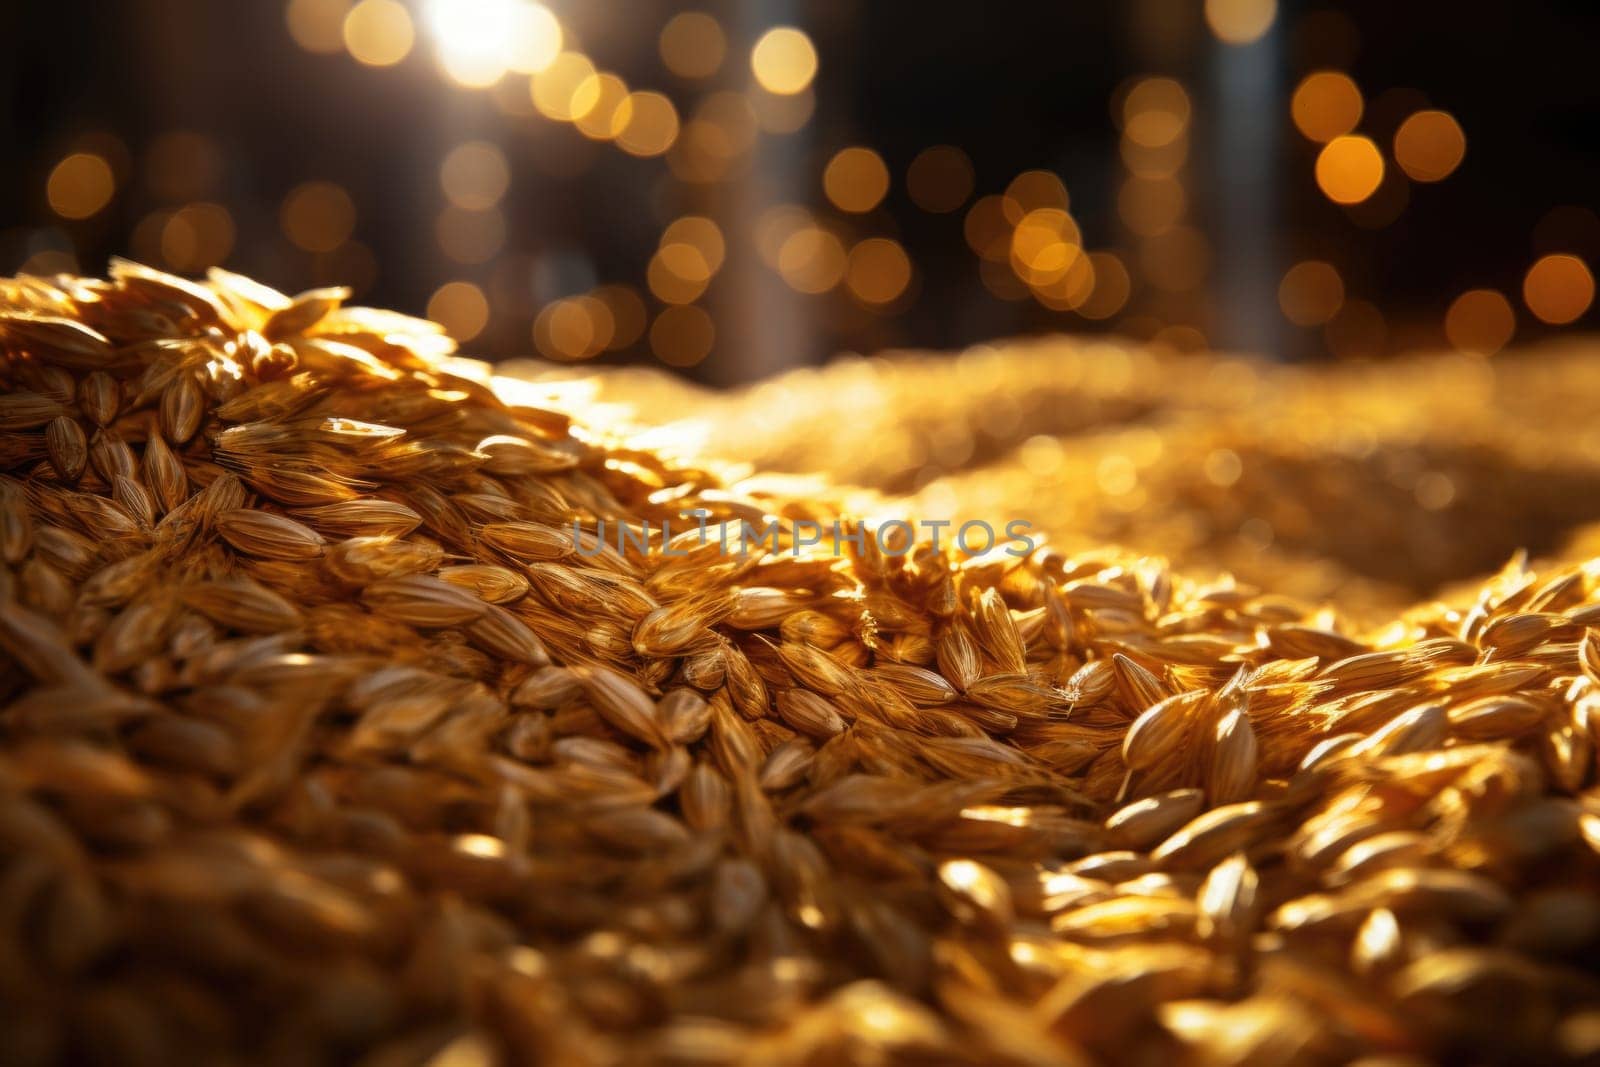 Grain warehouse. Heaps of grain on a wooden floor. glow effect. Harvest concept by Vovmar